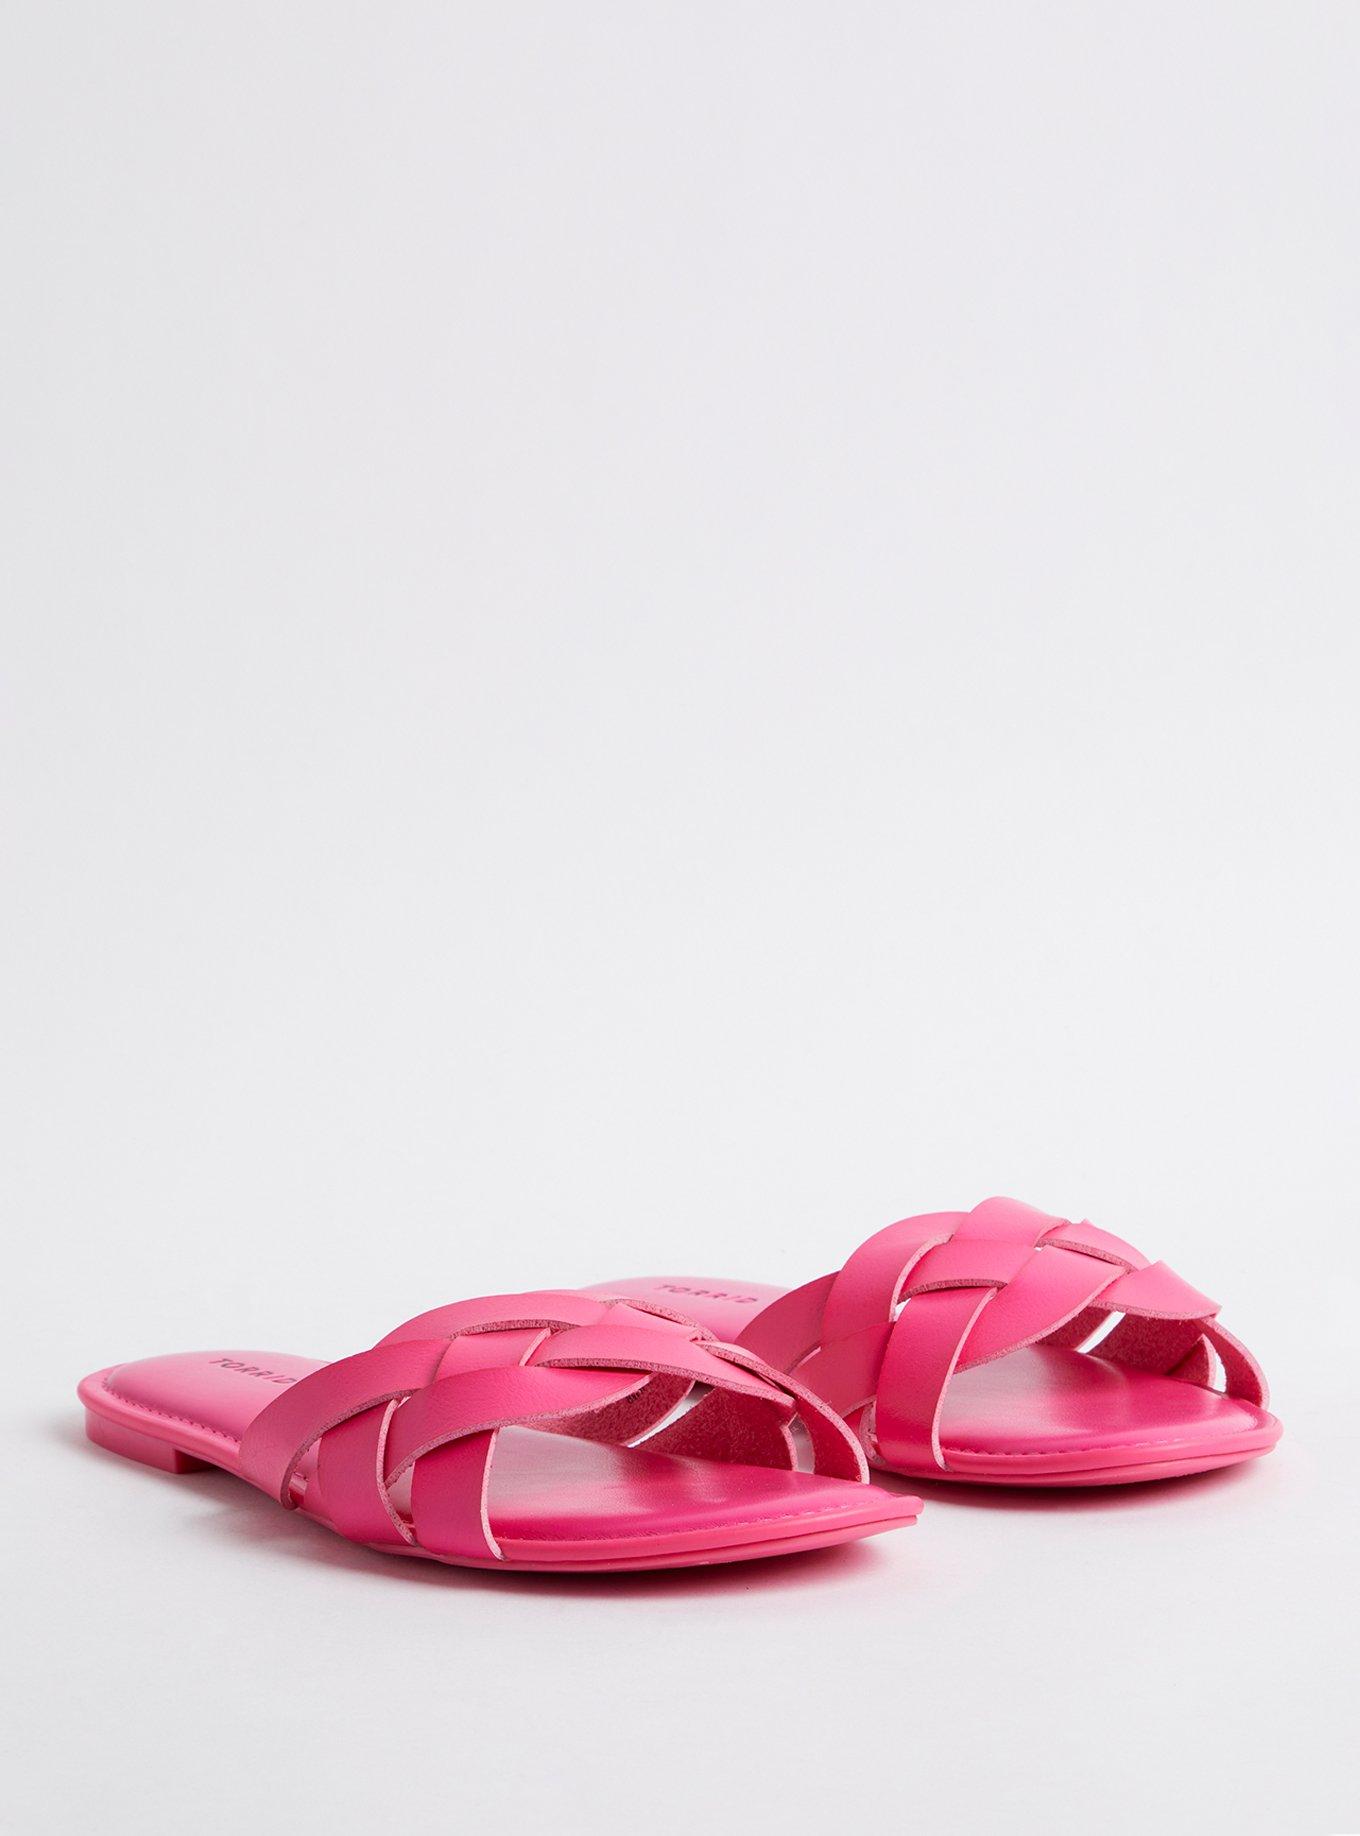 Torrid Sandals Womens 10WW Extra Wide Pink Black Neon Slip On Lug